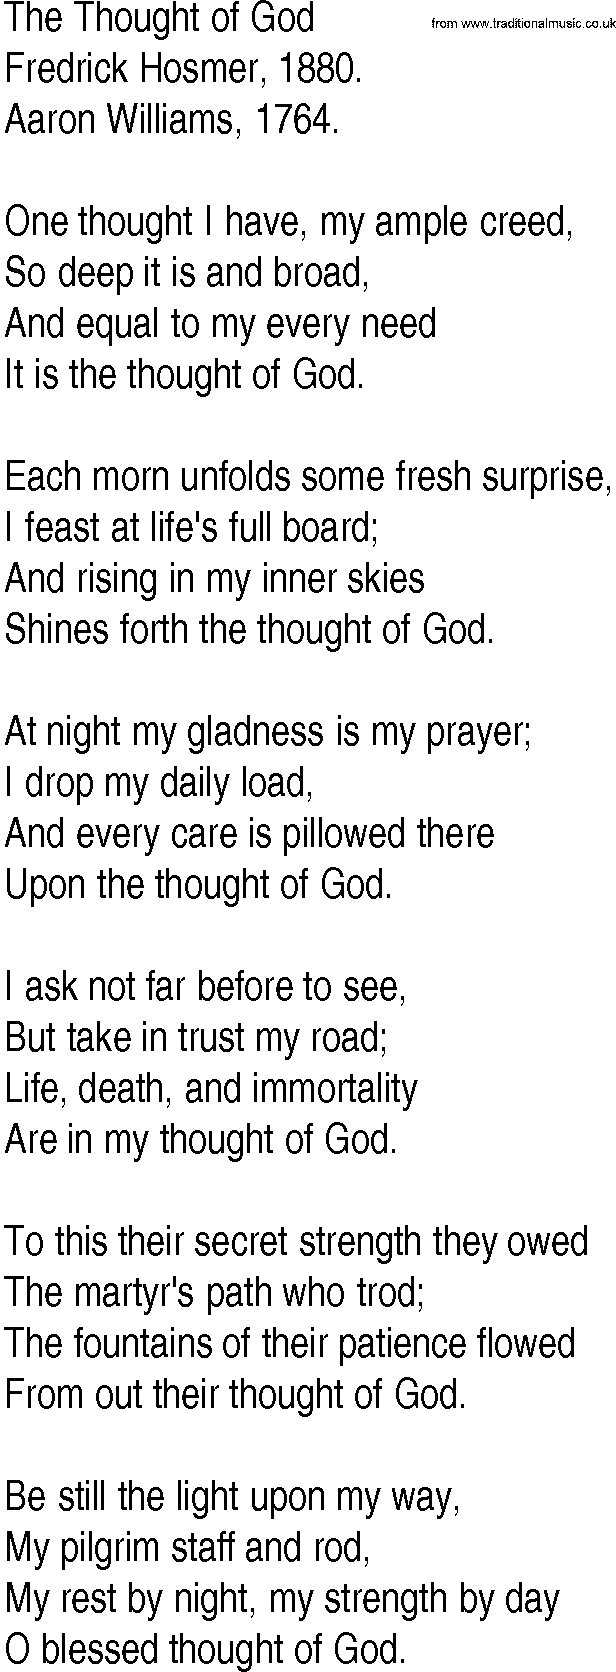 Hymn and Gospel Song: The Thought of God by Fredrick Hosmer lyrics